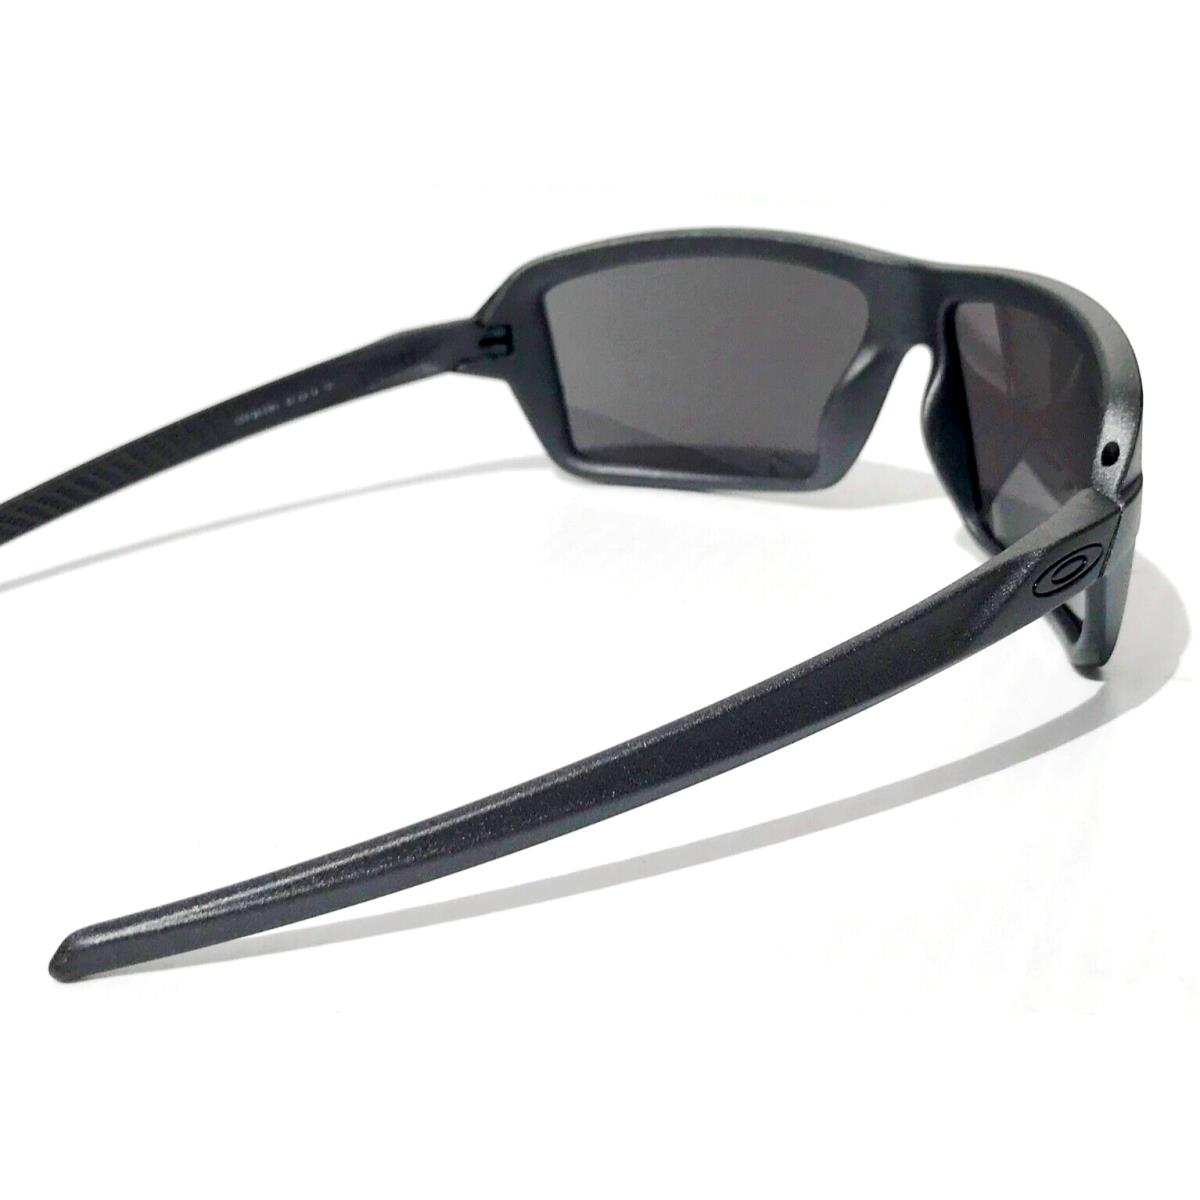 Oakley sunglasses Cables - Grey Frame, Black Lens